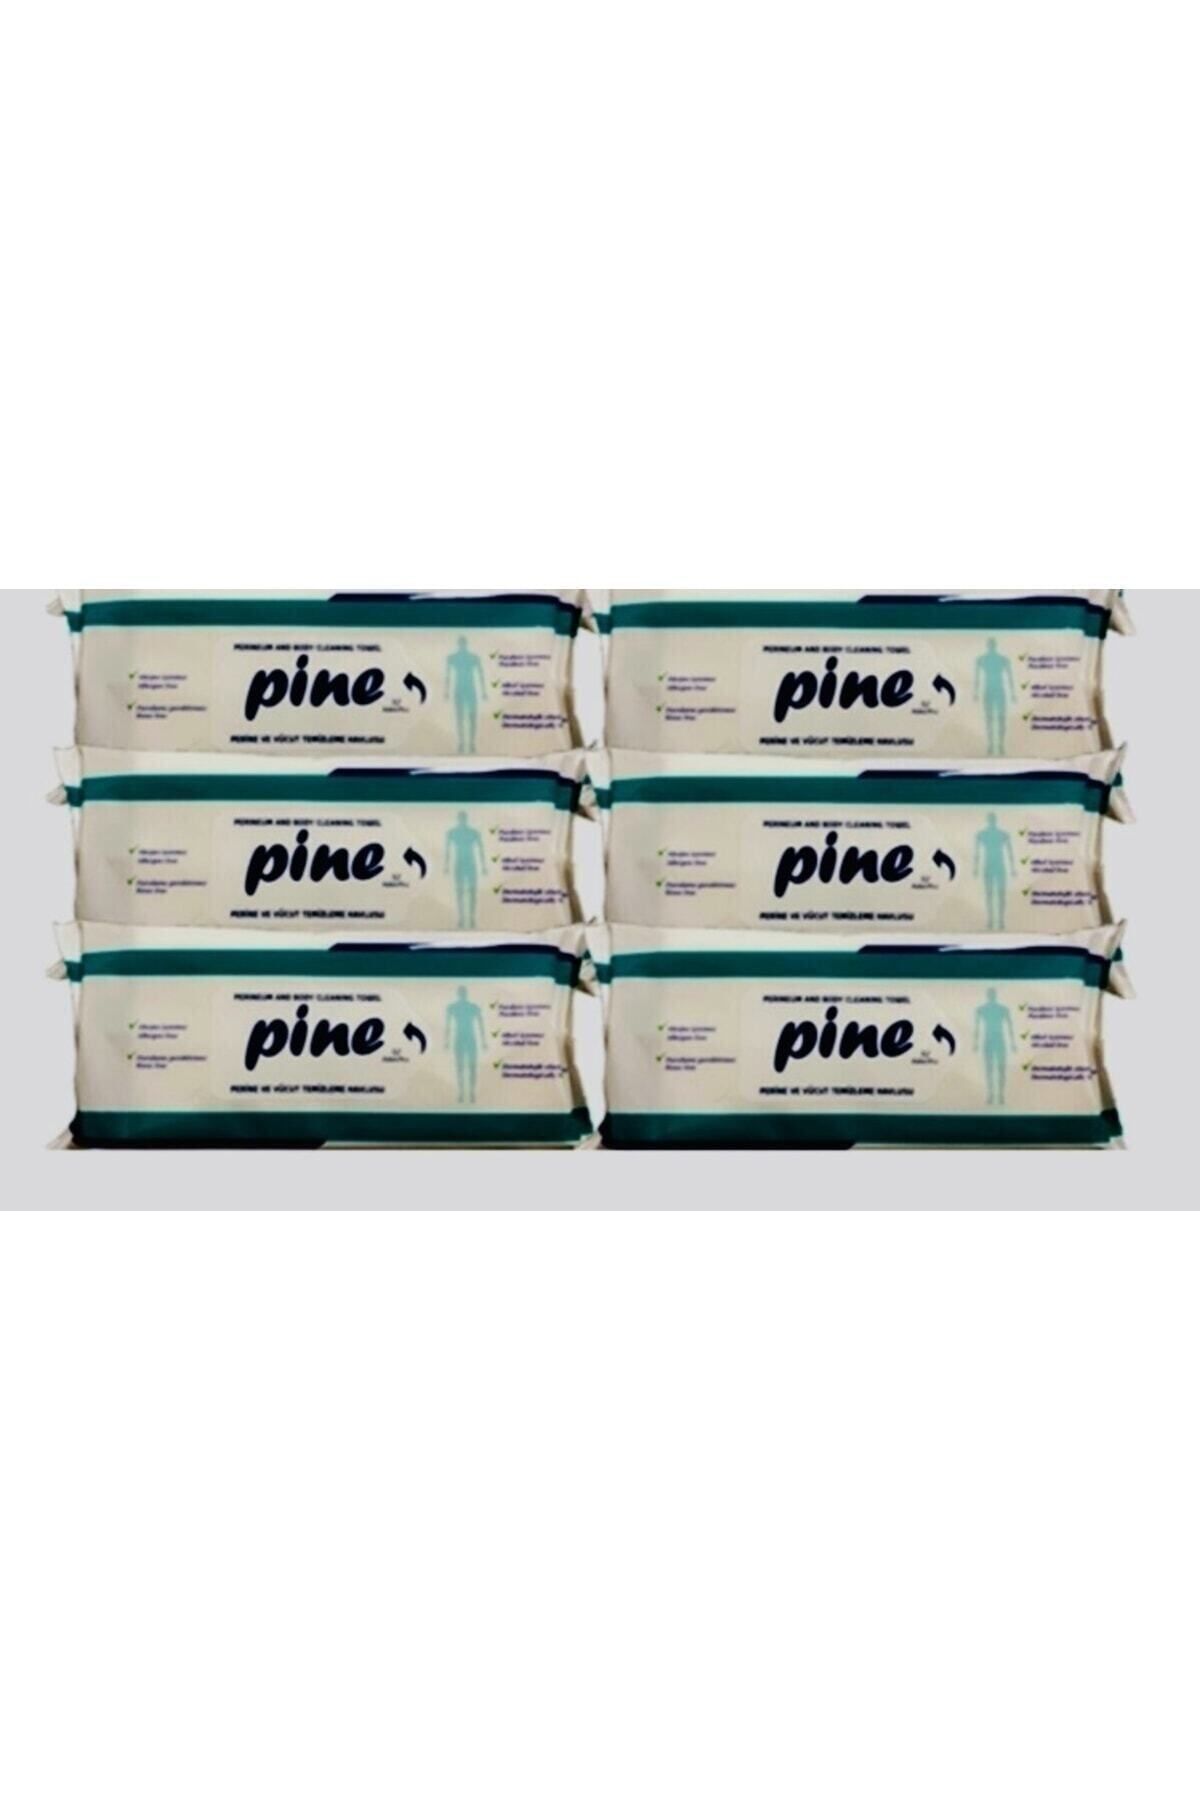 Pine Perine Antibakteriyel Vücut Temizleme Havlusu 52'li (6 PAKET)